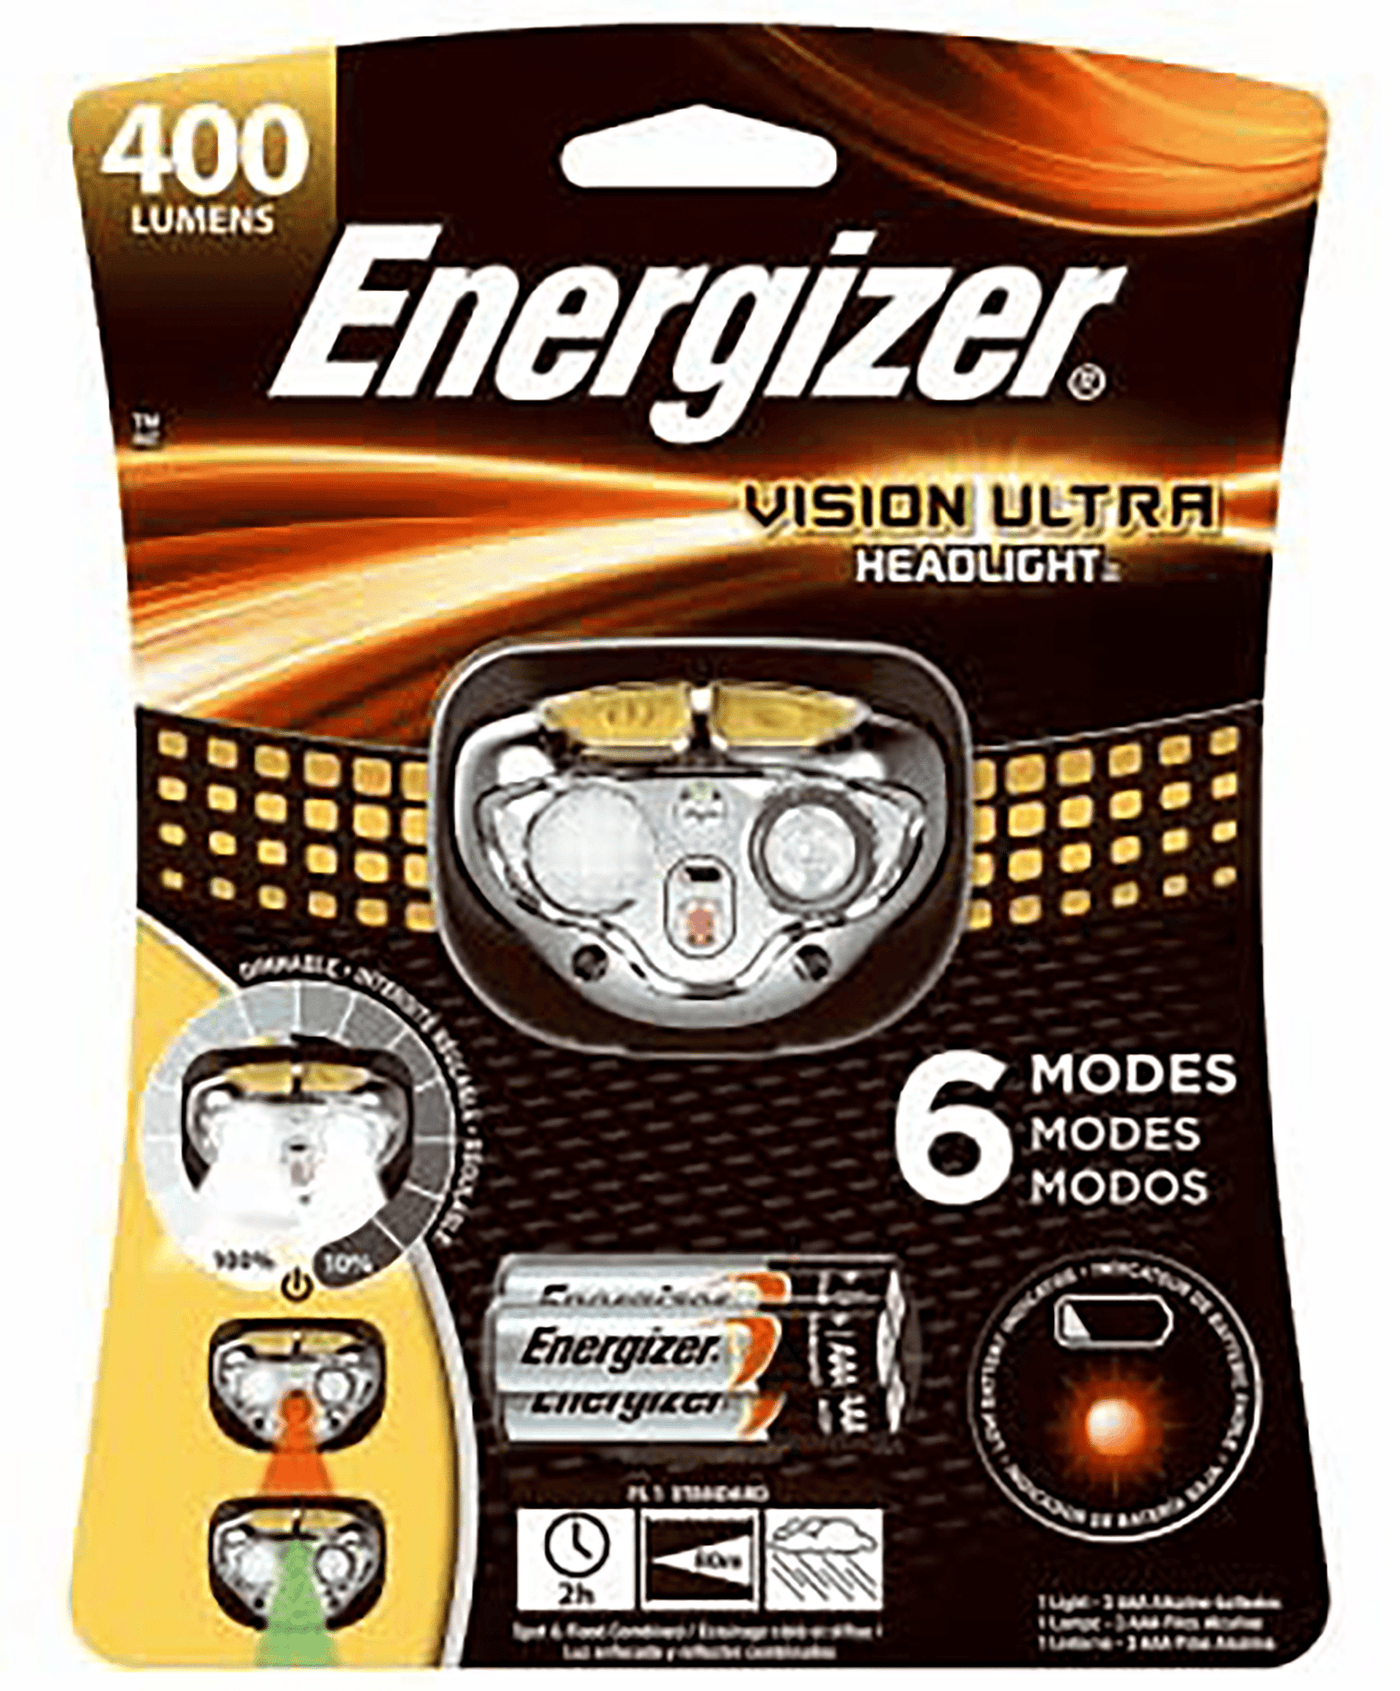 Energizer Energizer Vision Ultra Hd - Headlamp 450 Lumens W/aaa Batt Lights And Accessories